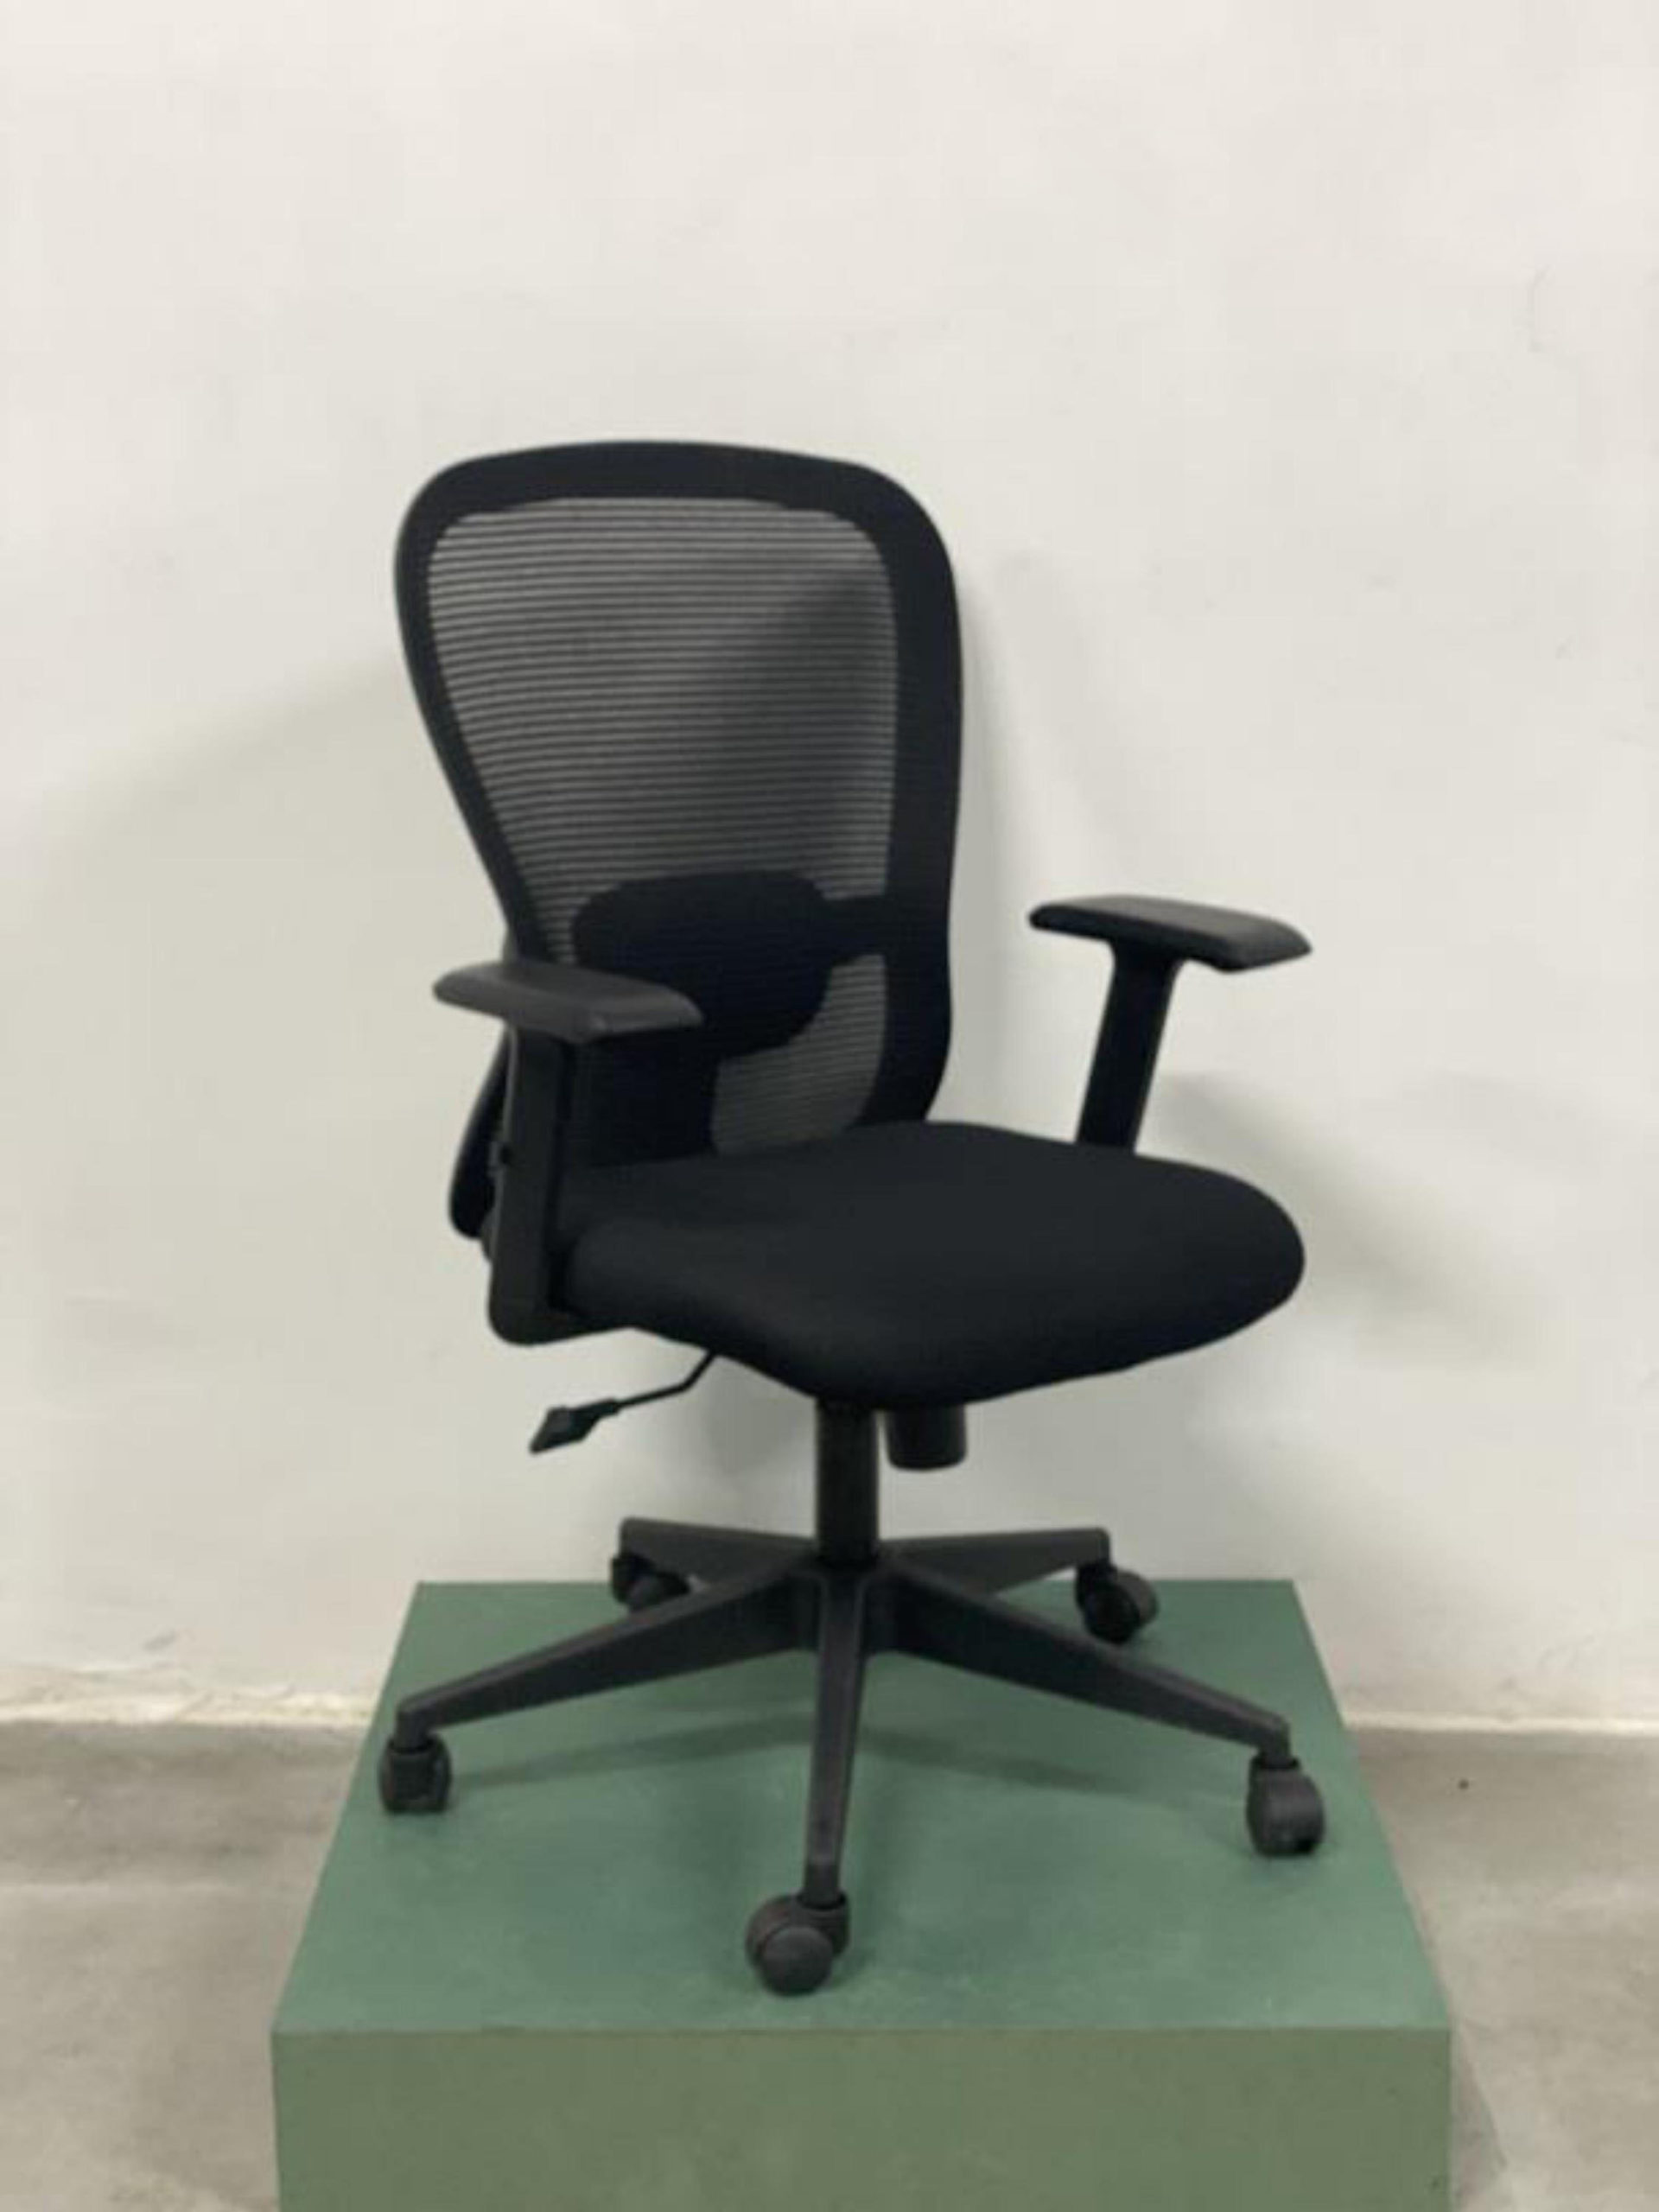 Dell black chair